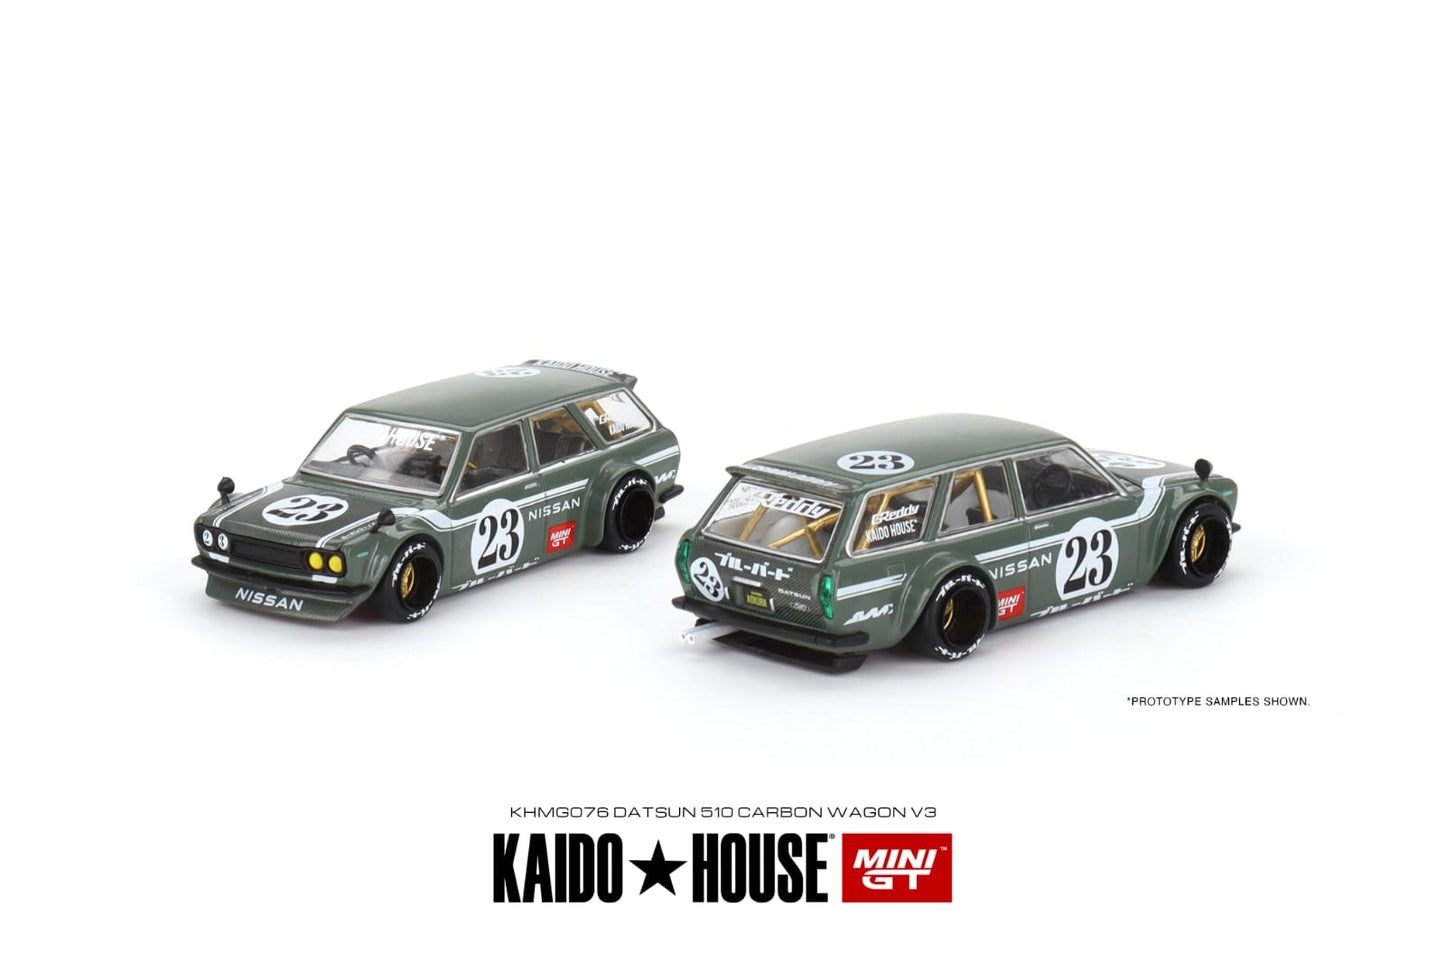 Mini GT x Kaido House 1/64 Datsun 510 Wagon - Carbon V3